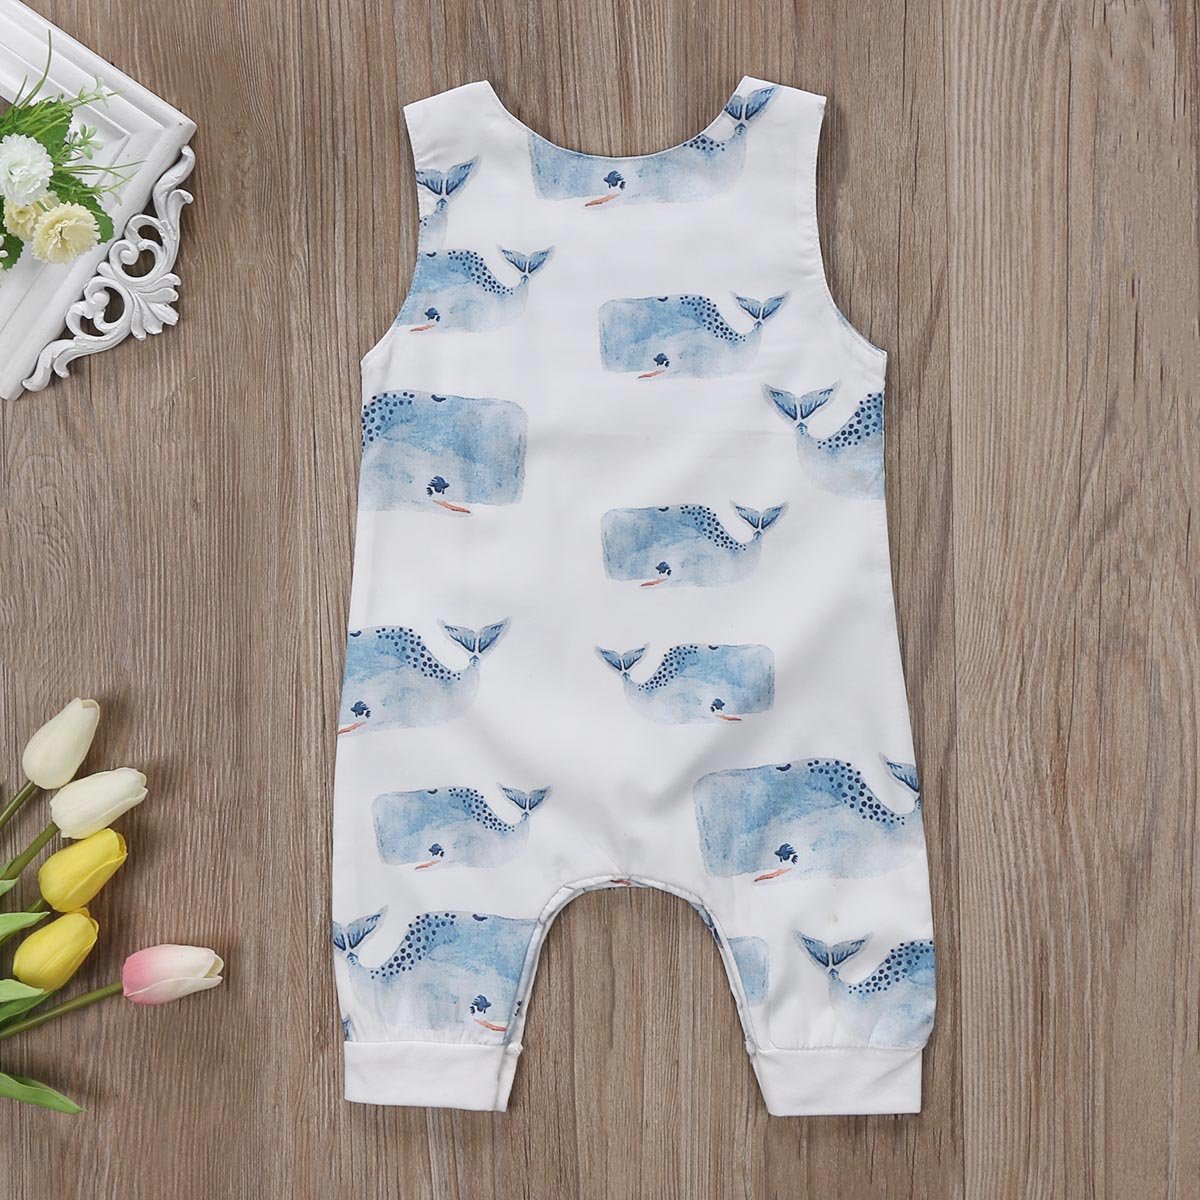 Adorable Blue Whale Bodysuit for Babies